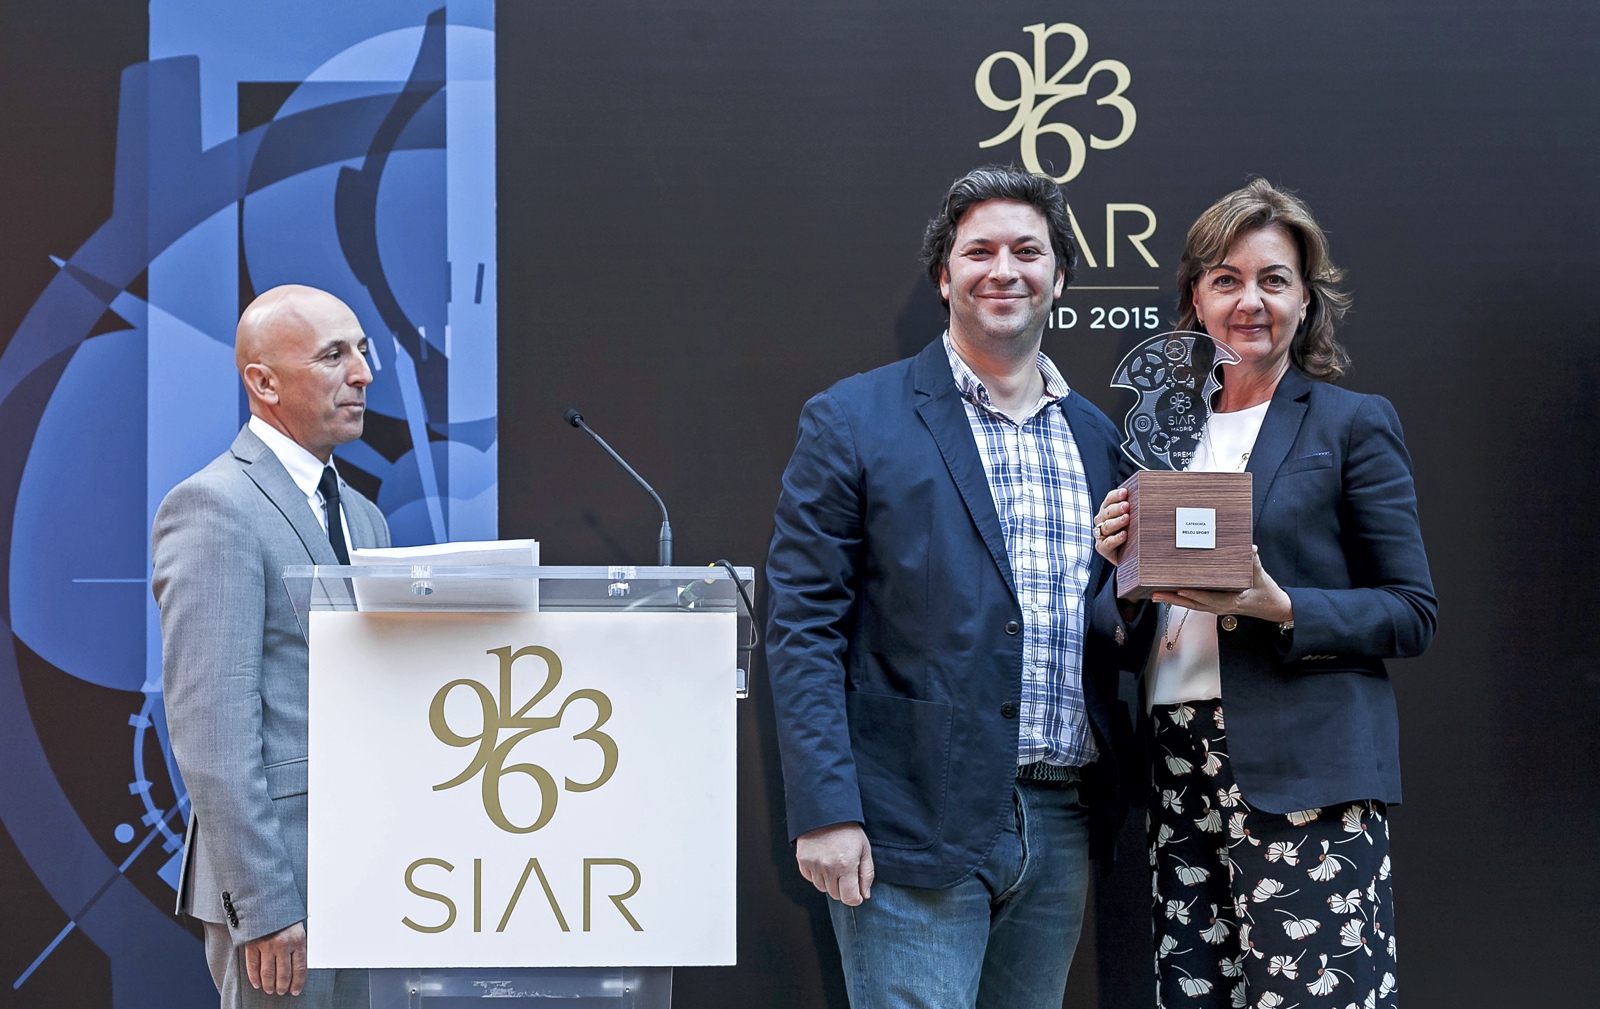 SIAR 2015 premio al mejor reloj deportivo para audemars piguet